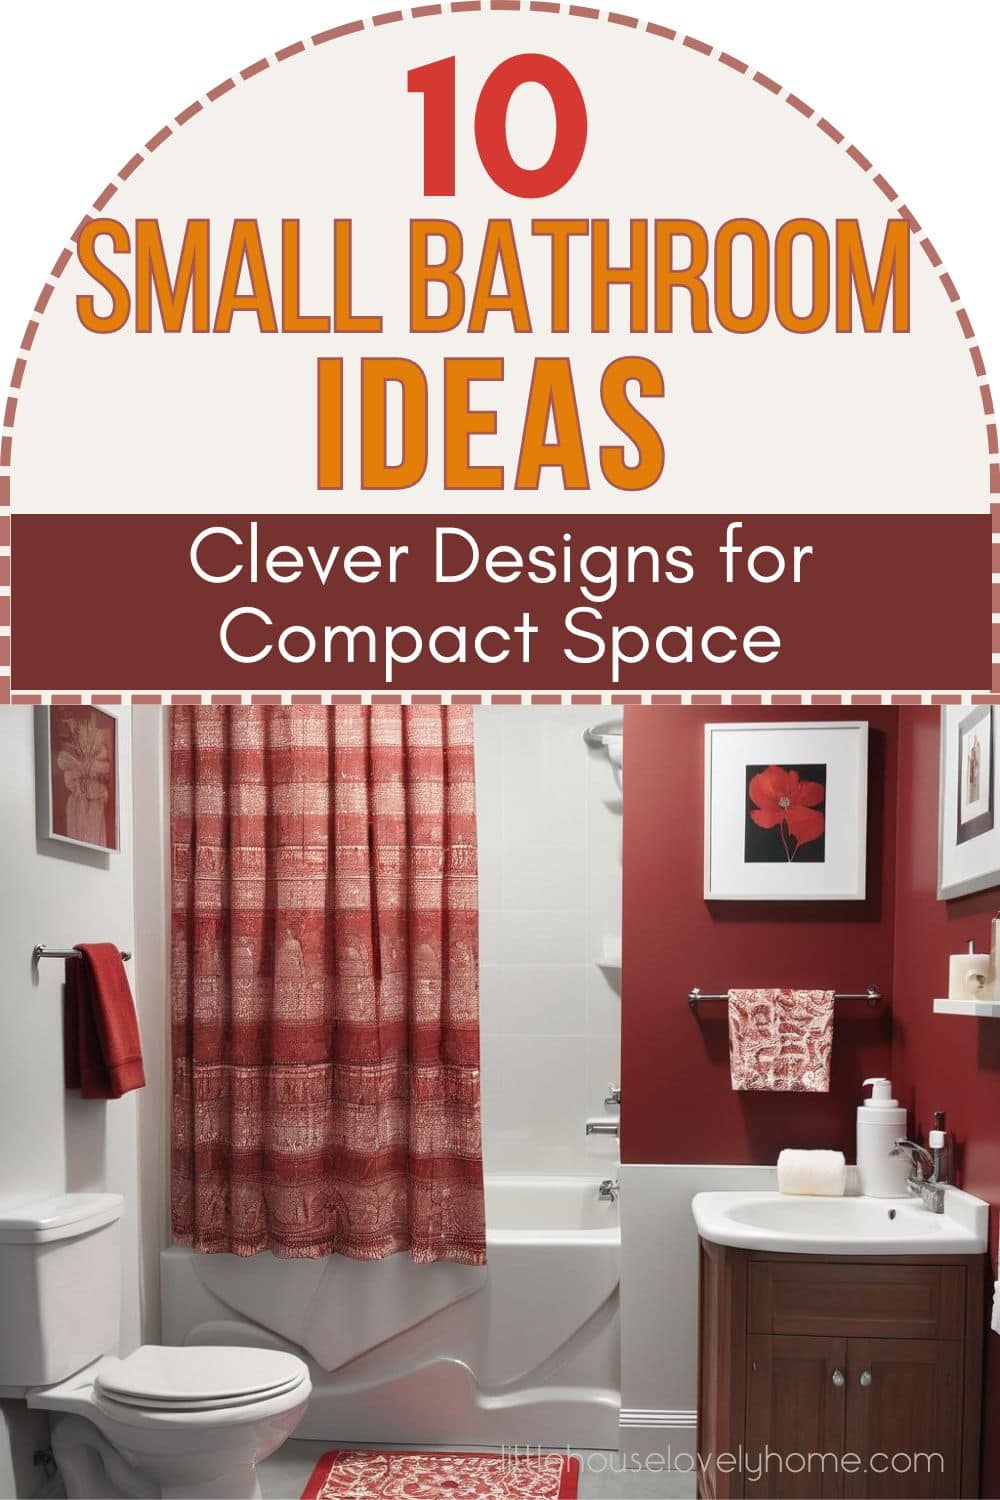 Small Bathroom Ideas Pin Image